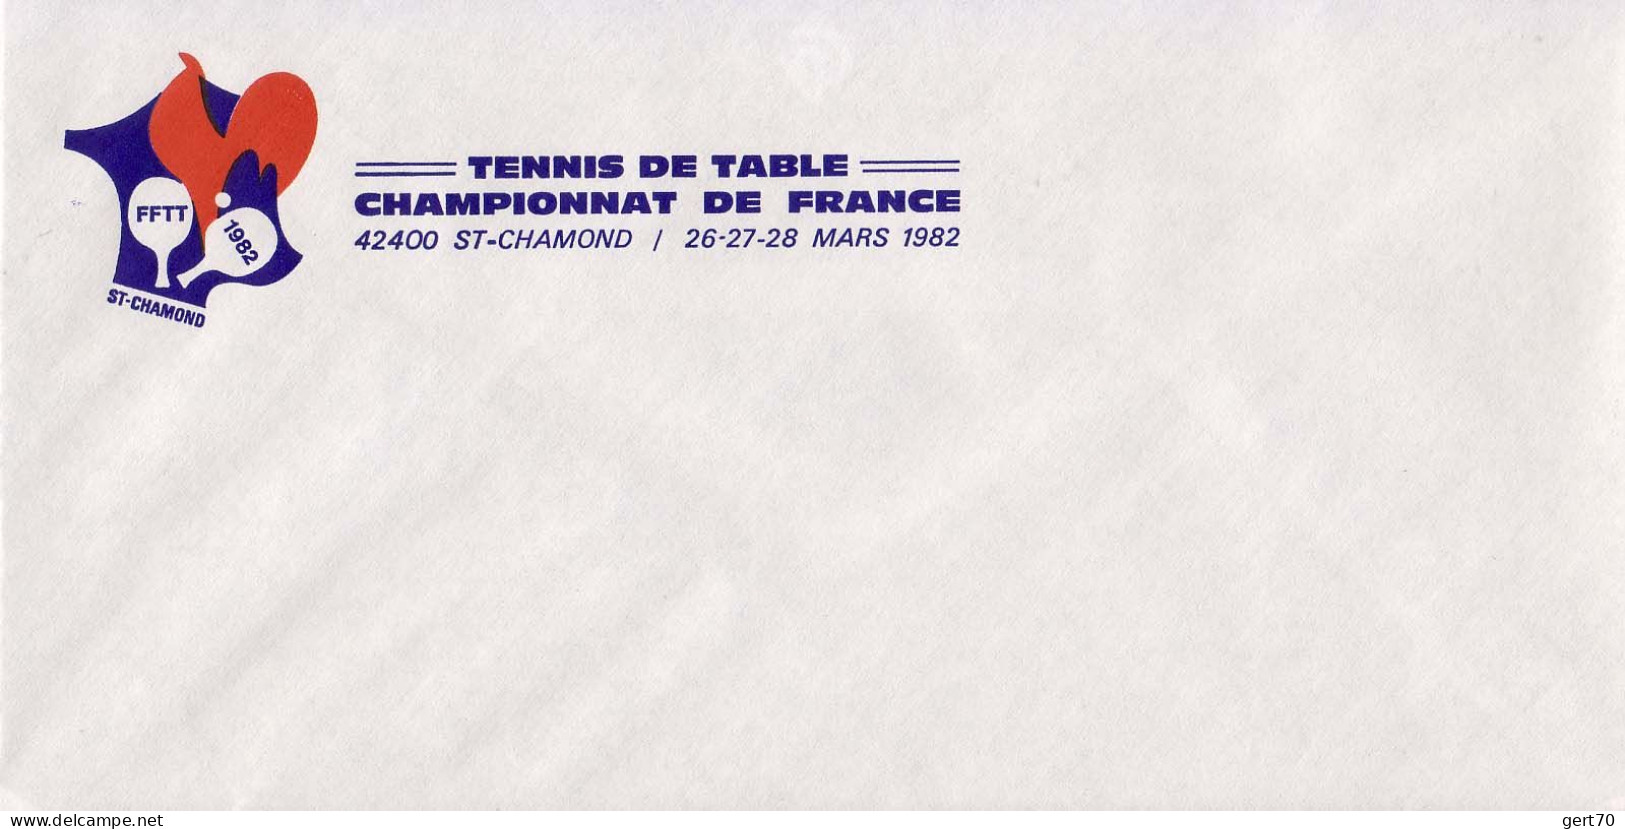 France 1982, Mint Cover / Enveloppe Vierge / French TT Championships, Saint-Chamond - Tennis De Table